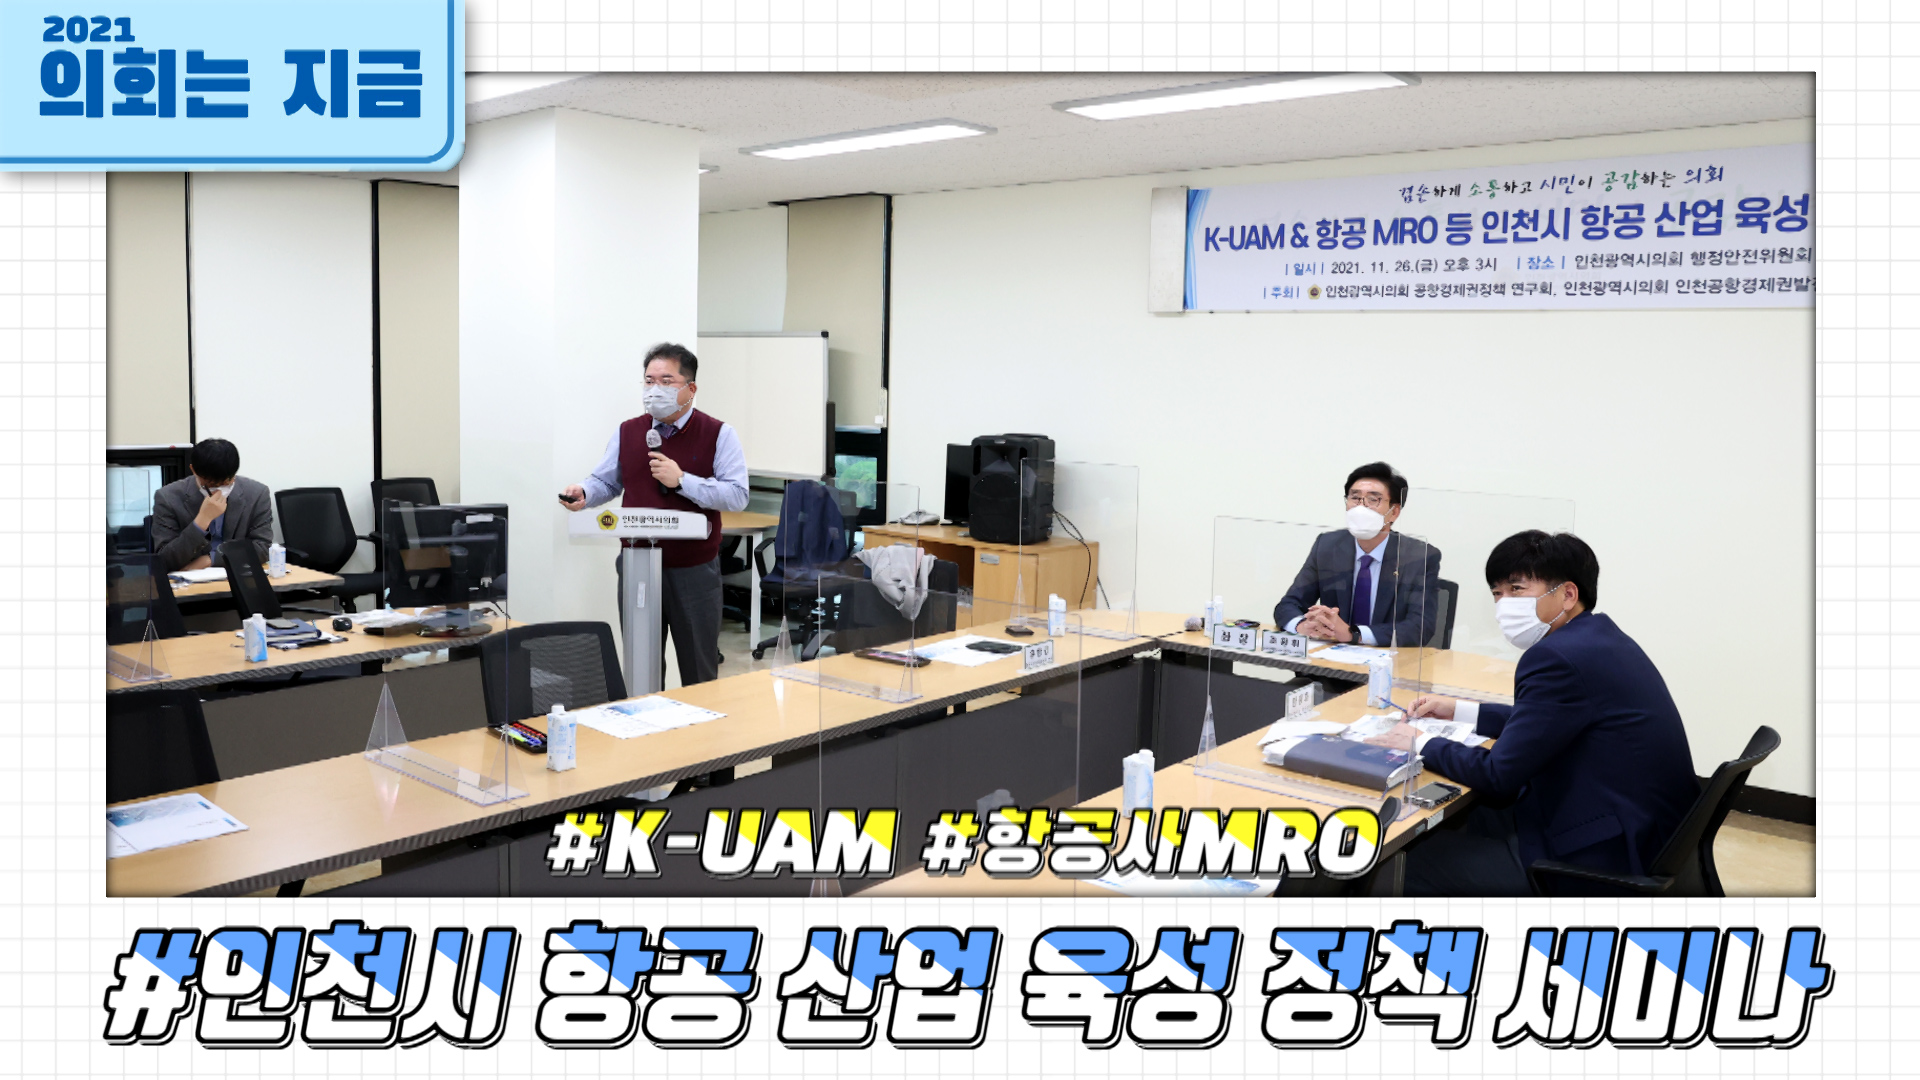 K-UAM & 항공사MRO 등 인천시 항공 산업 육성 정책 세미나 사진